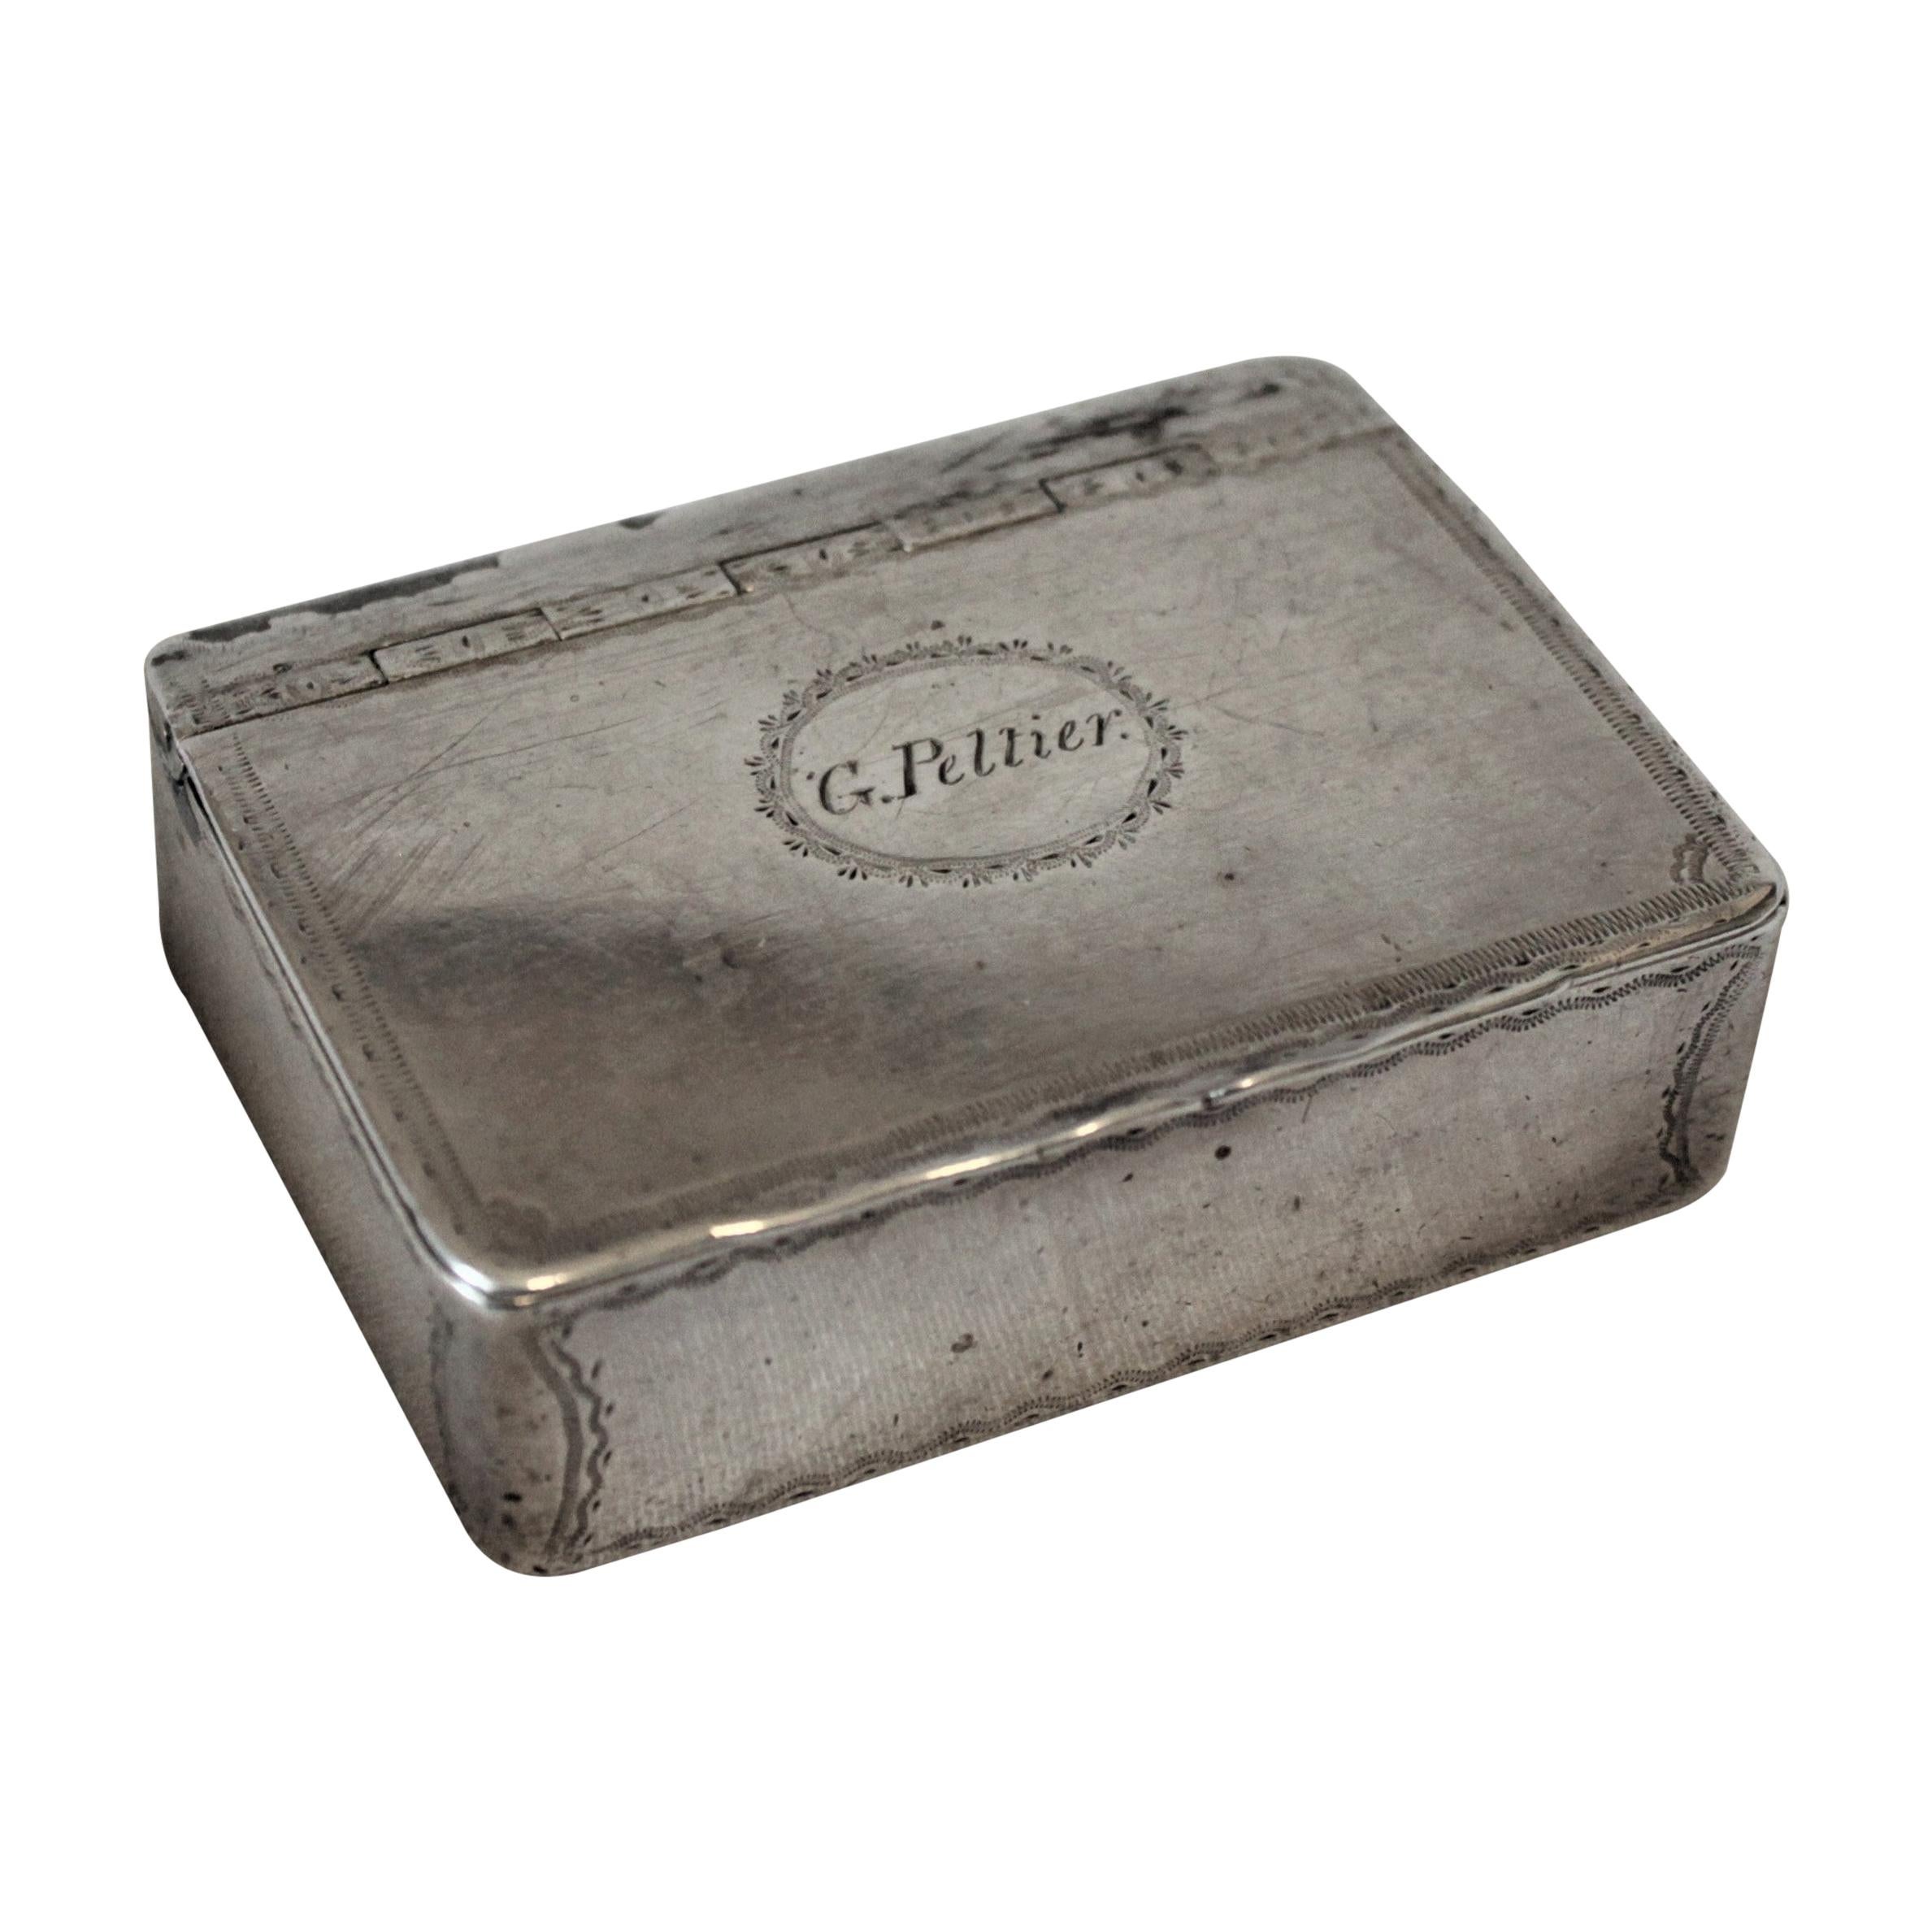 Paul Morin Antique Pre-Confederation Canadian Sterling Silver Snuff Box